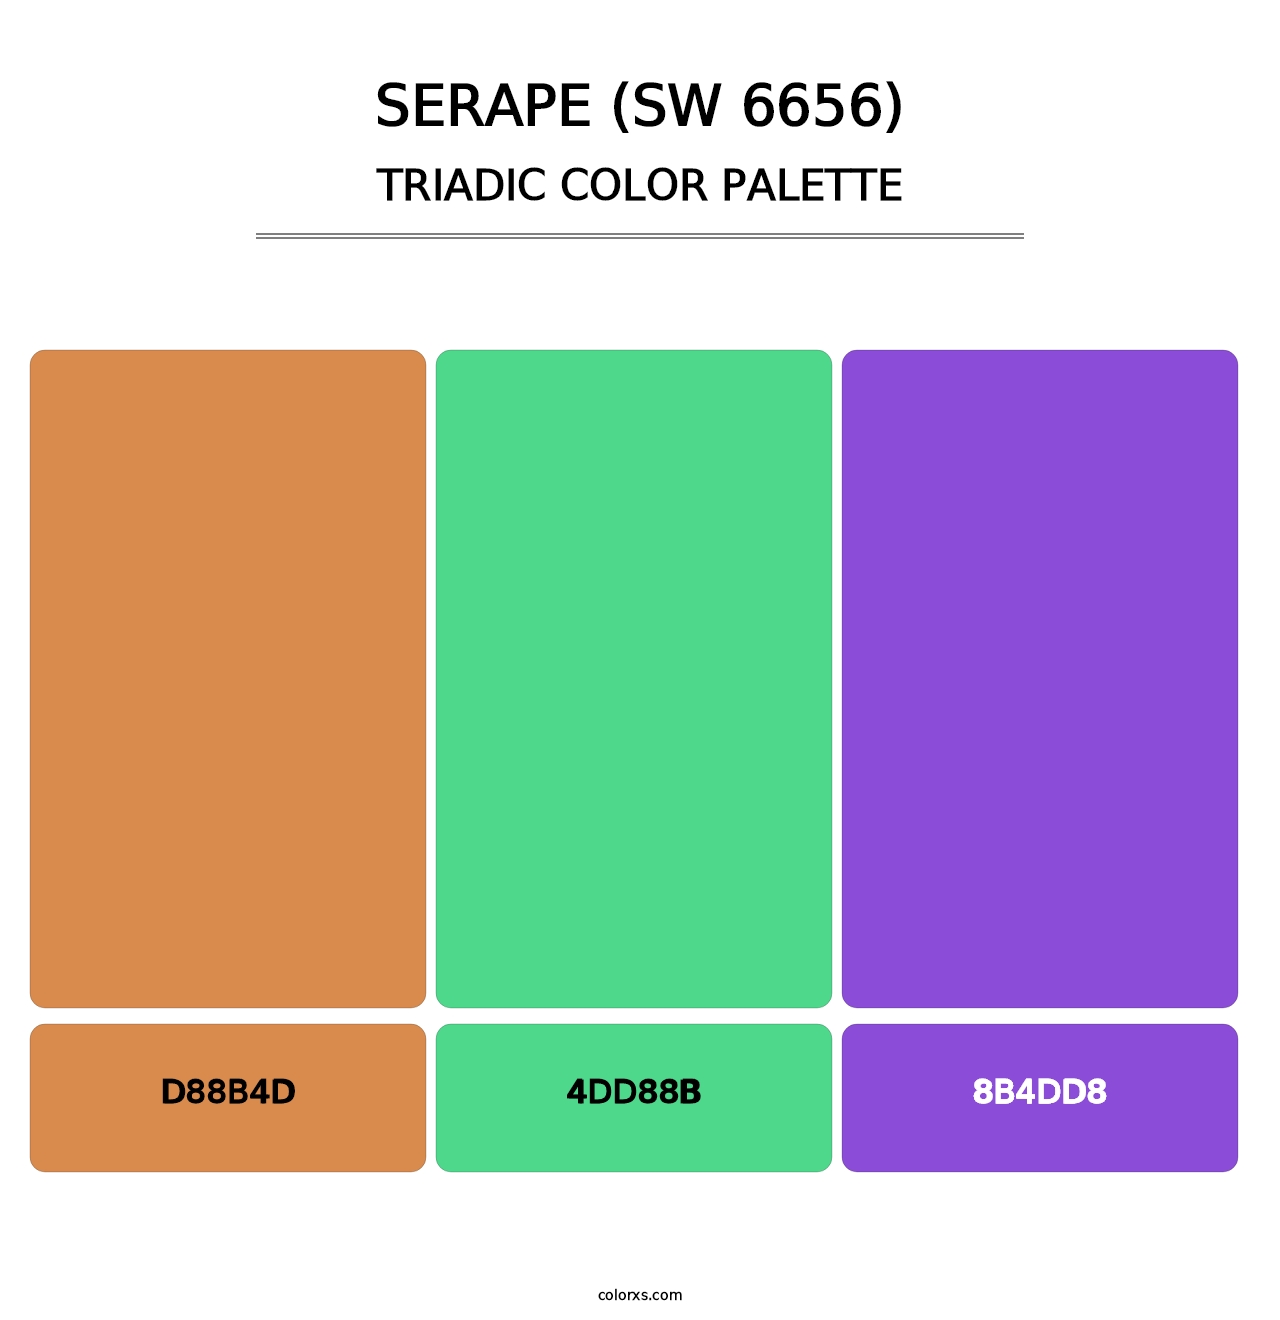 Serape (SW 6656) - Triadic Color Palette